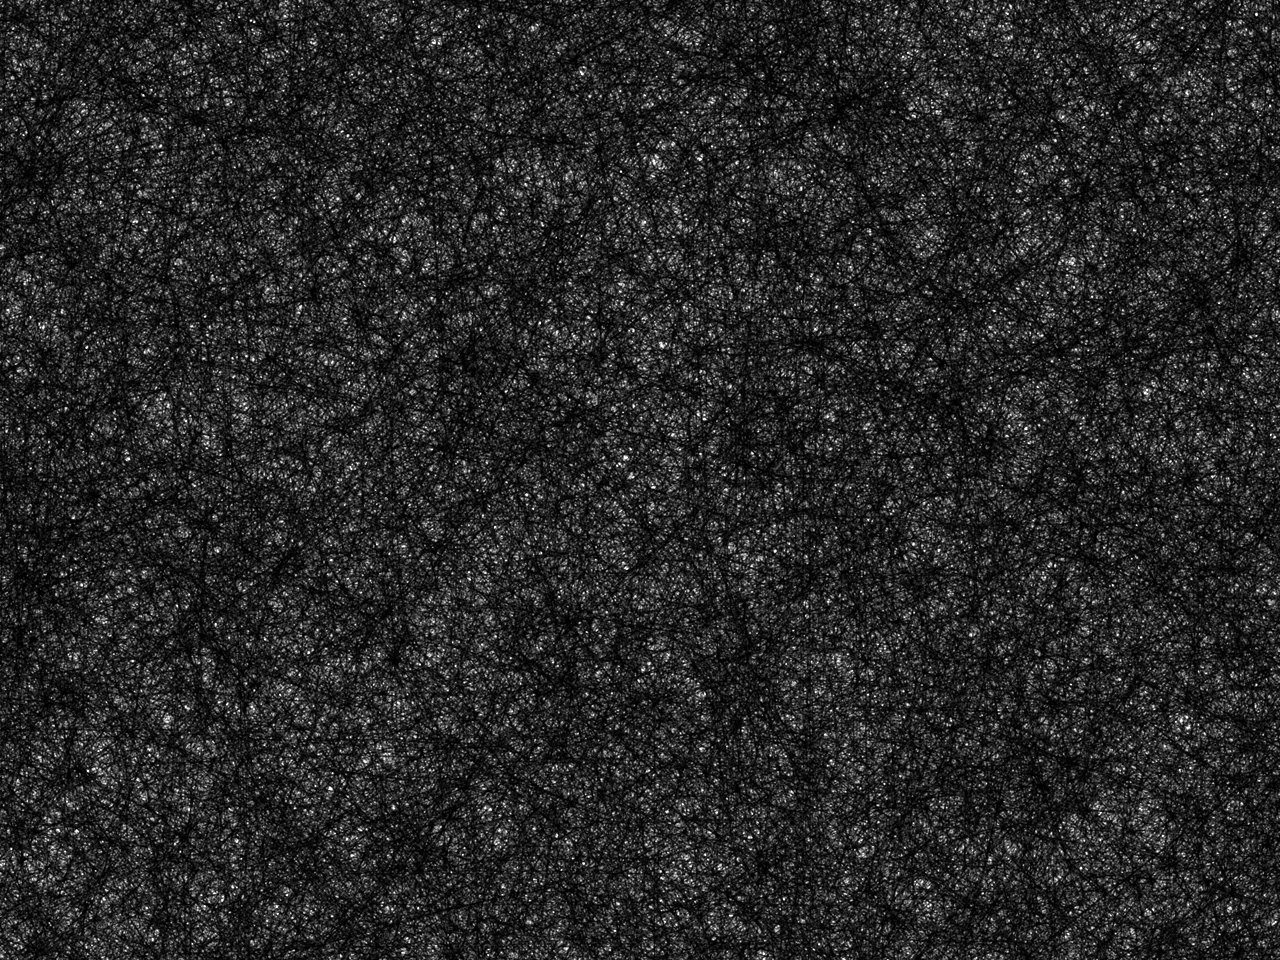 White And Black Background Tumblr   clipartsgramcom 1280x960